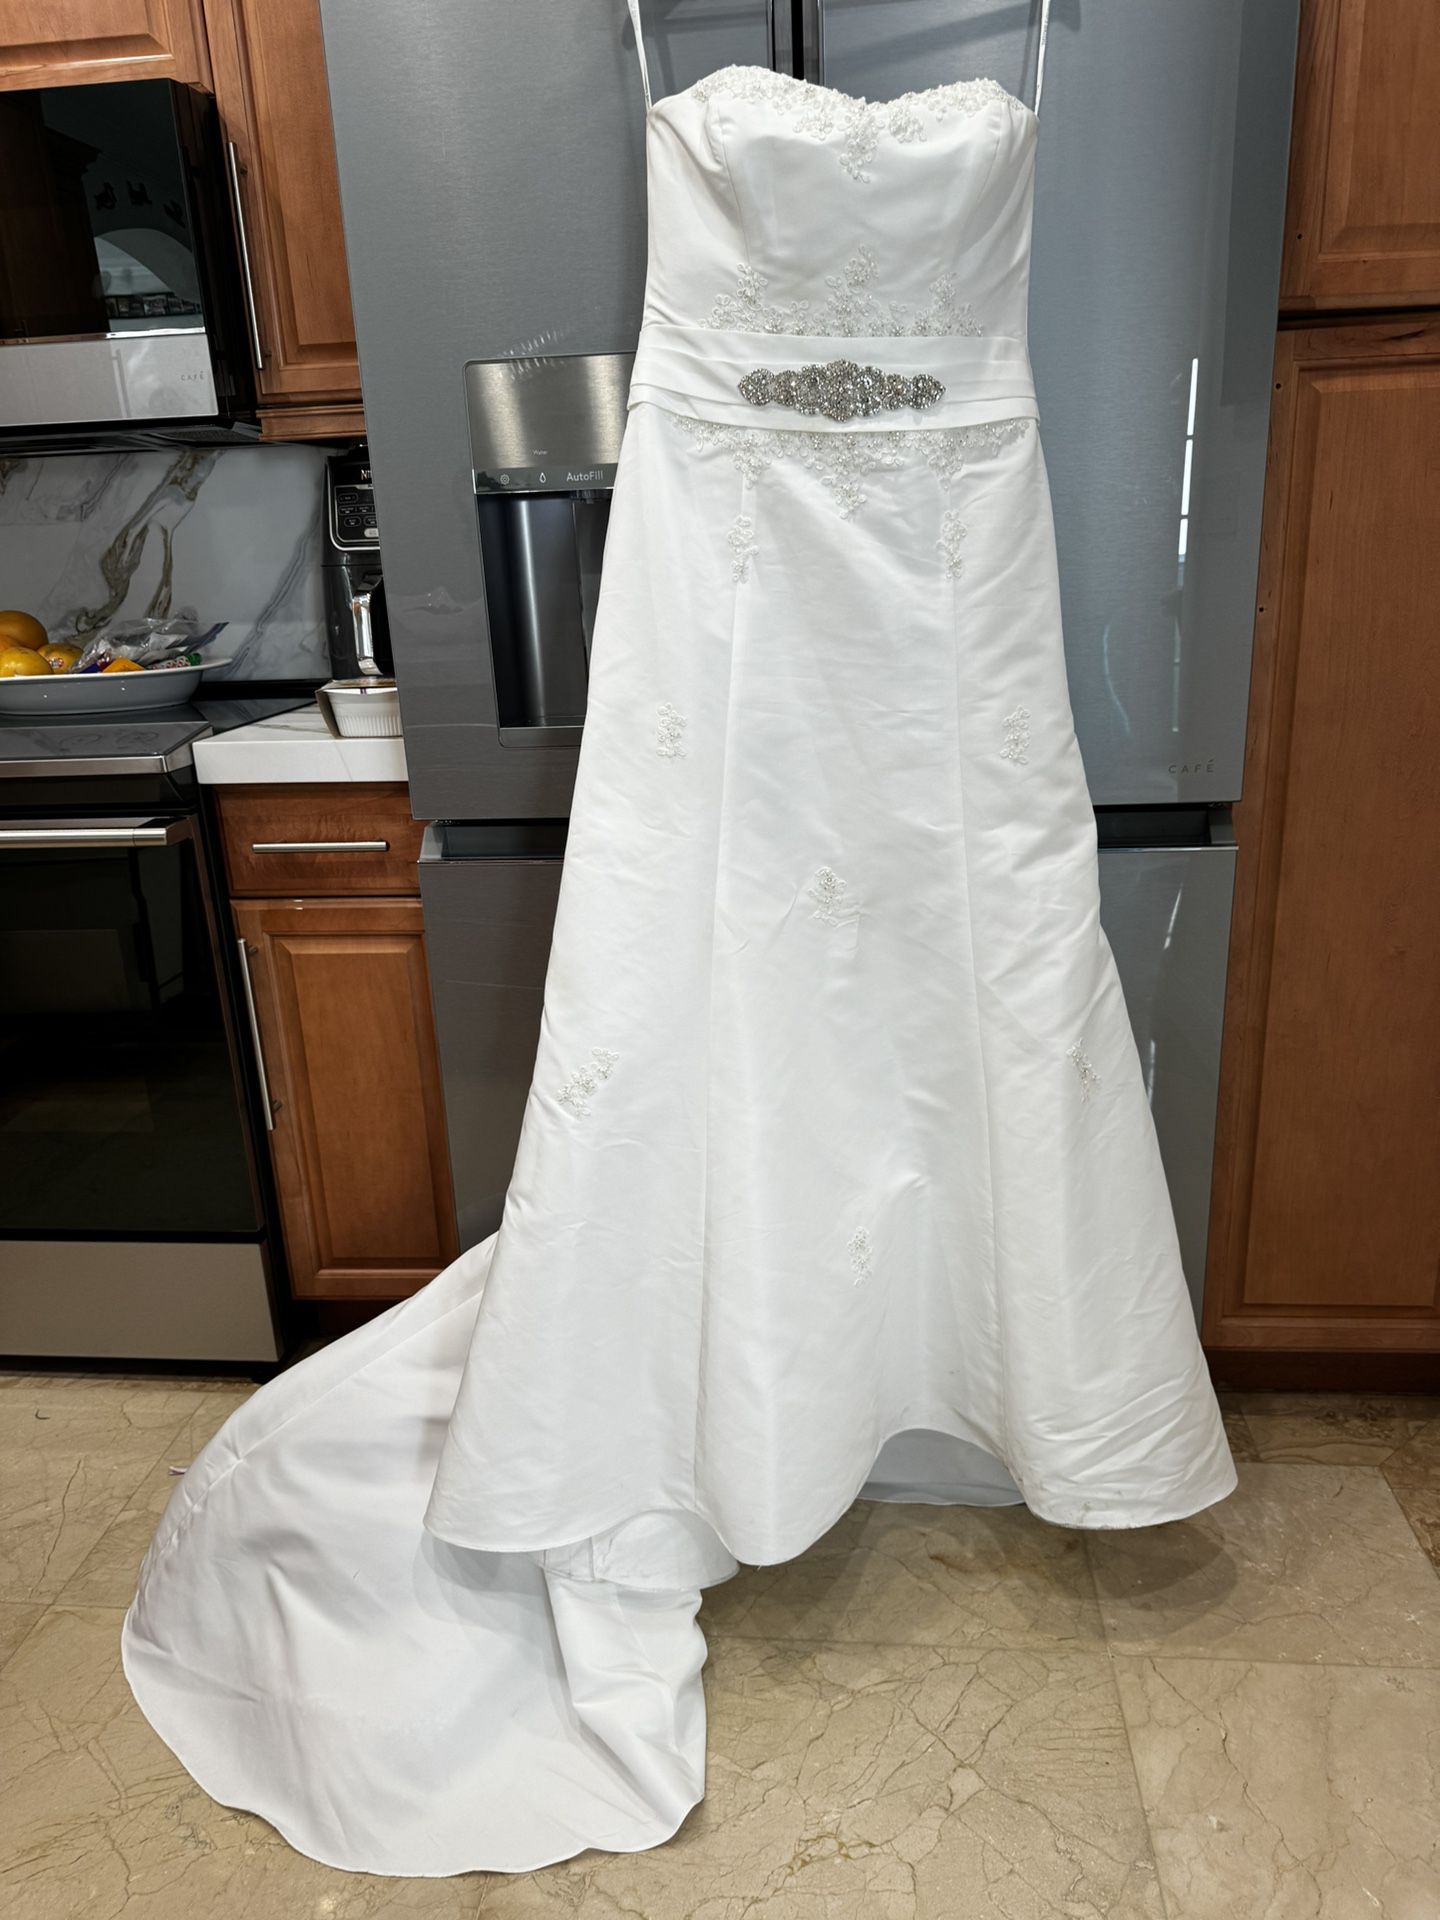 Brides Wedding Dress